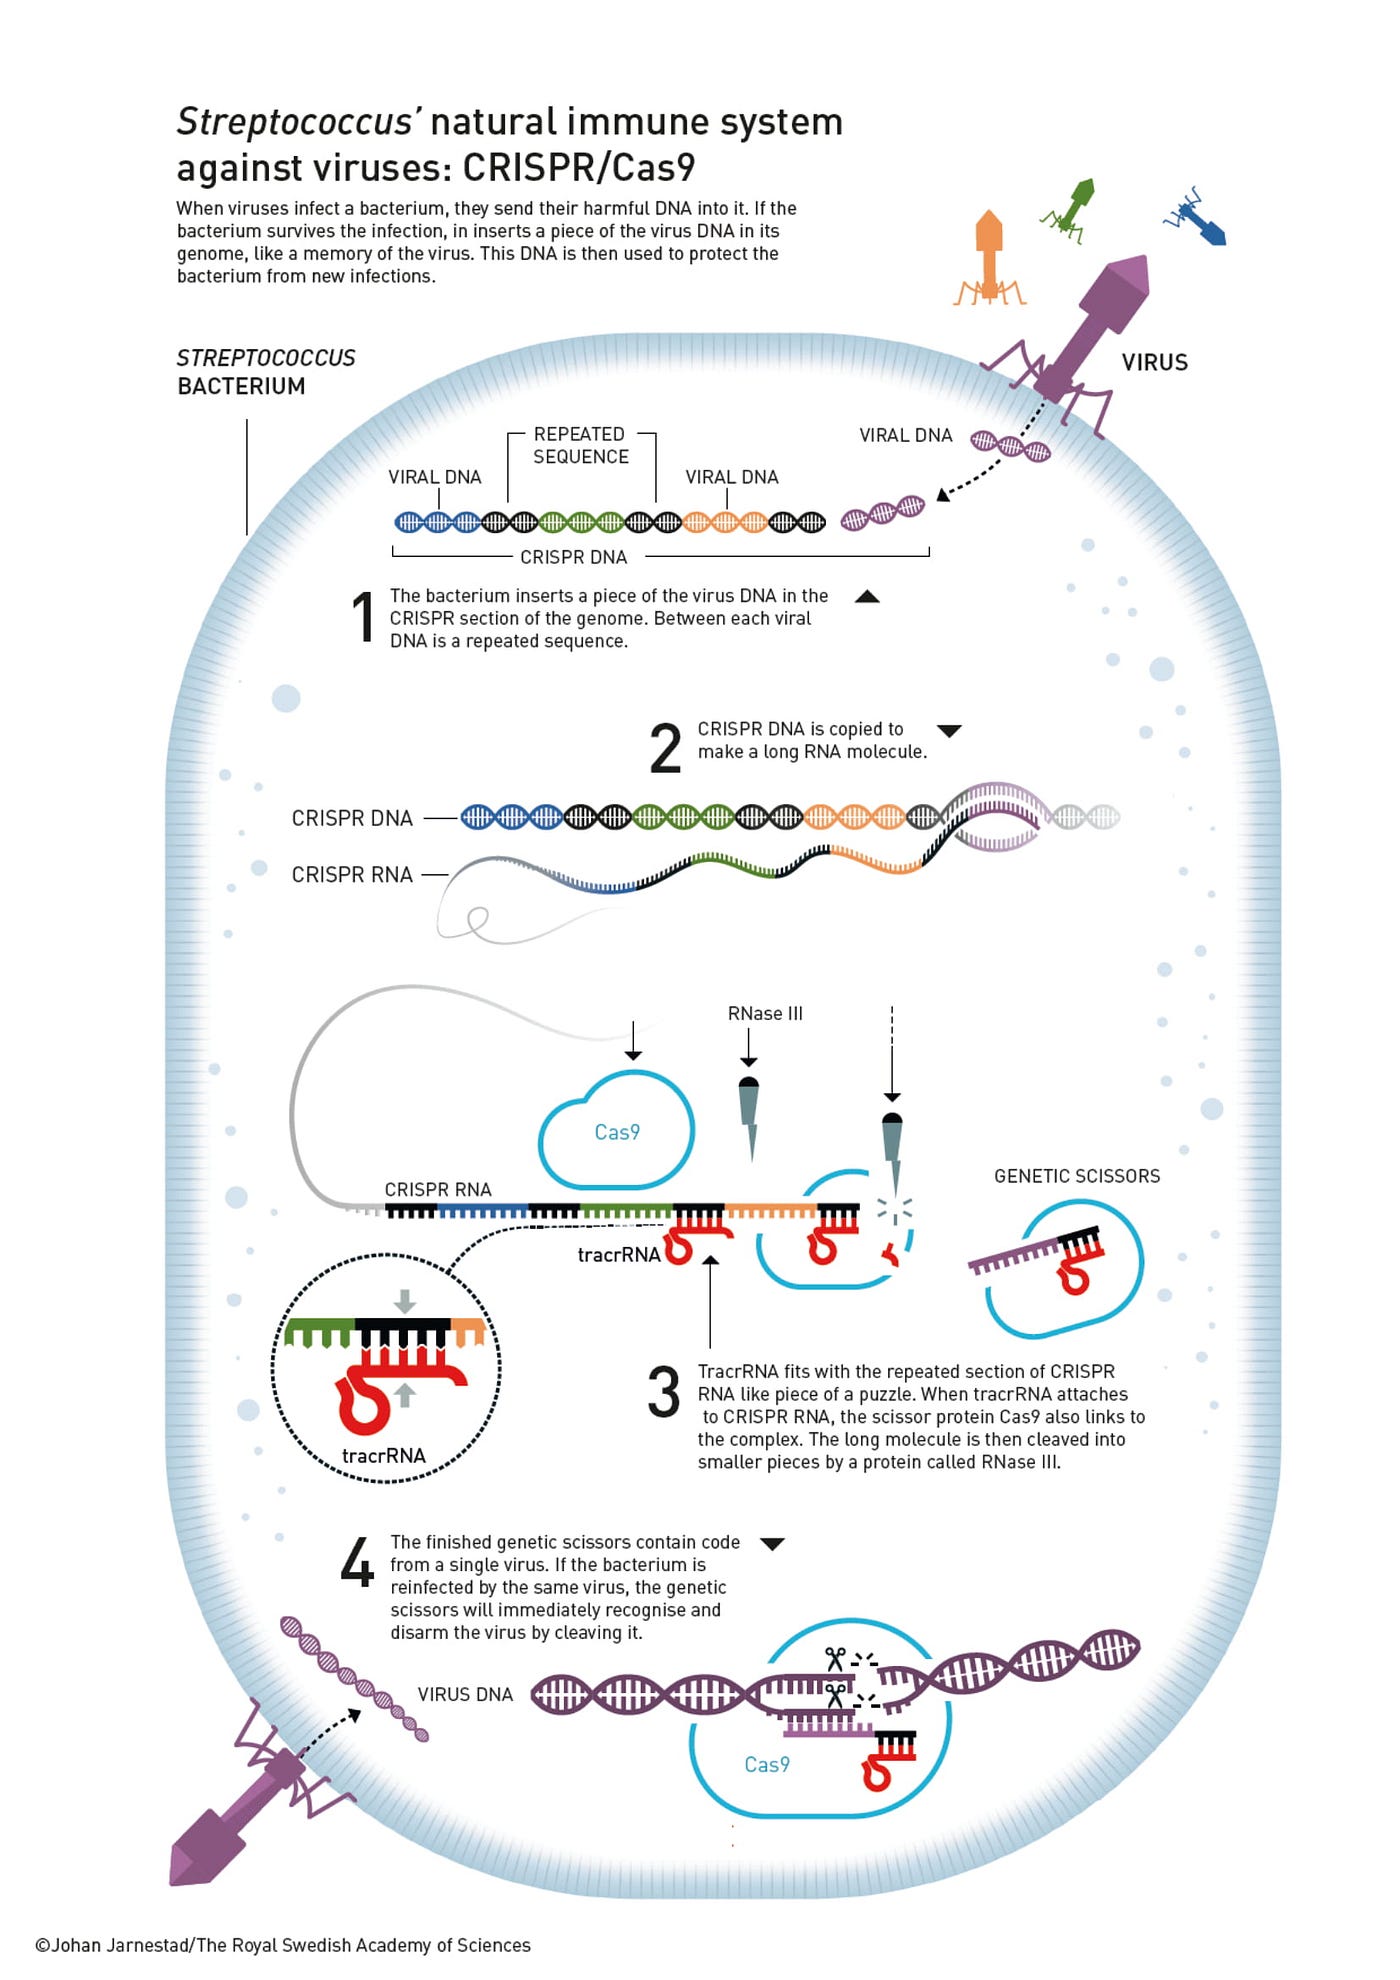 How CRISPR Works in a Bacterium